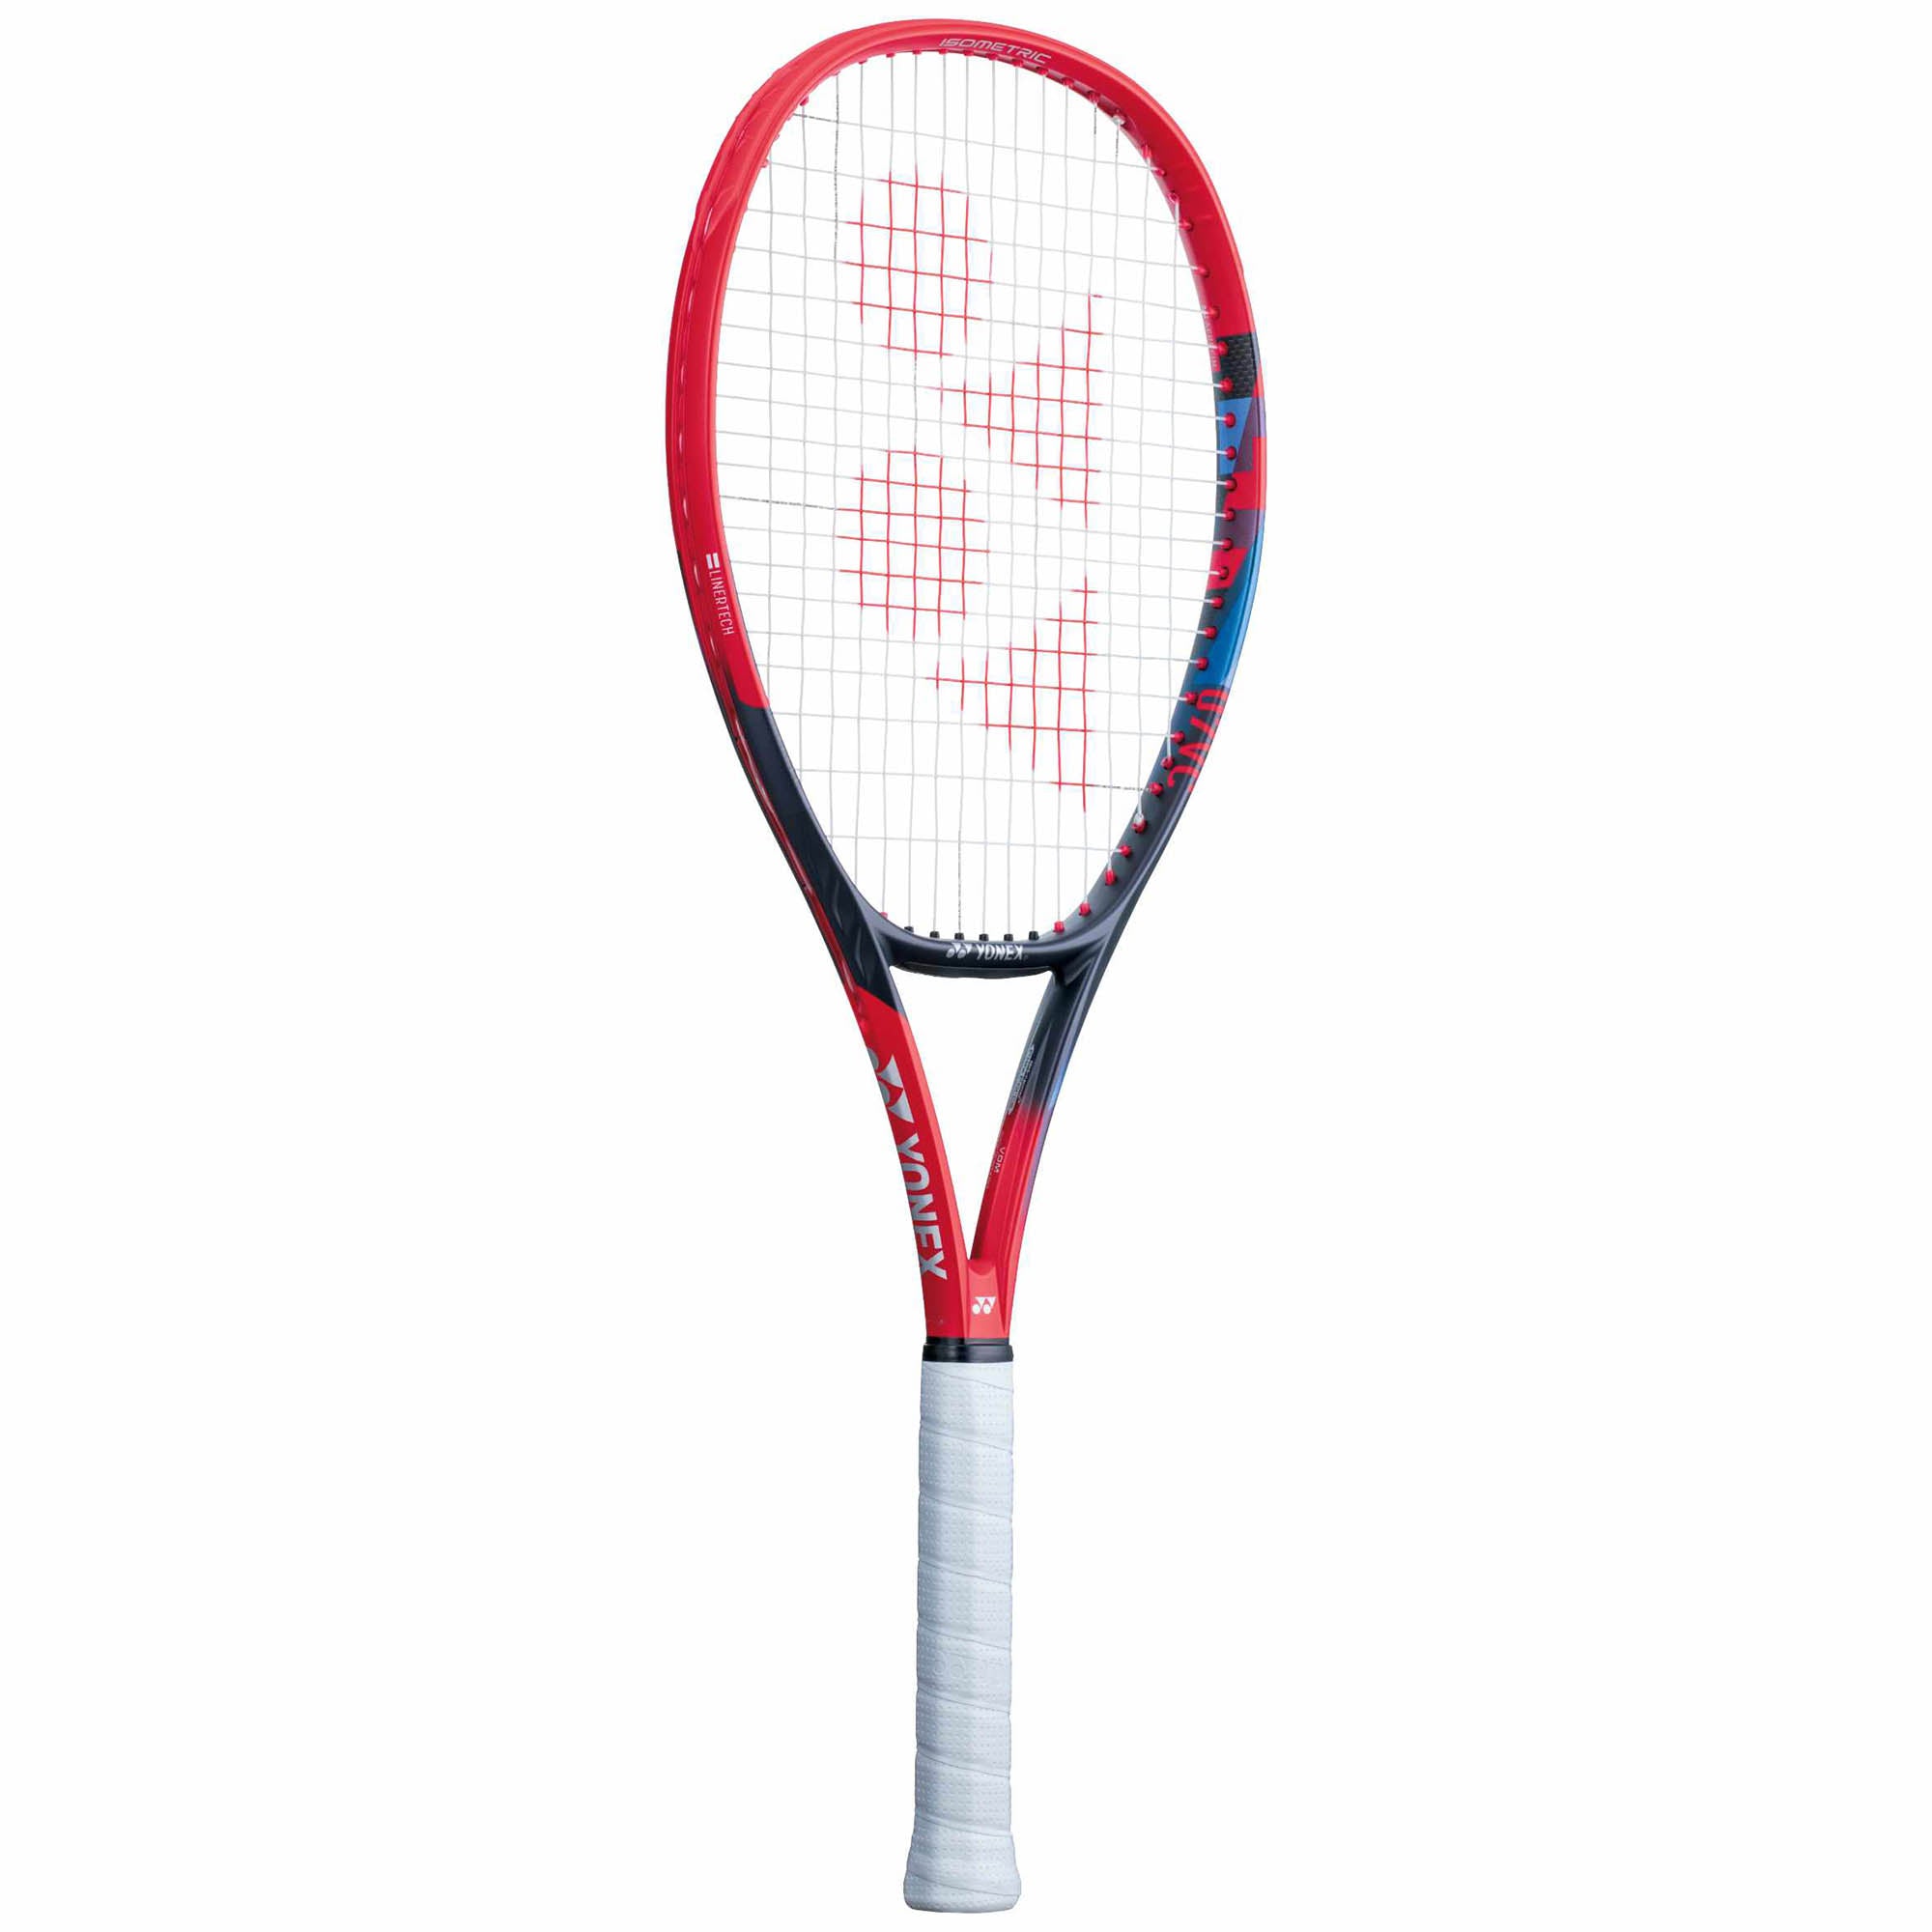 Image of Yonex VCORE 100 LG Tennis Racket